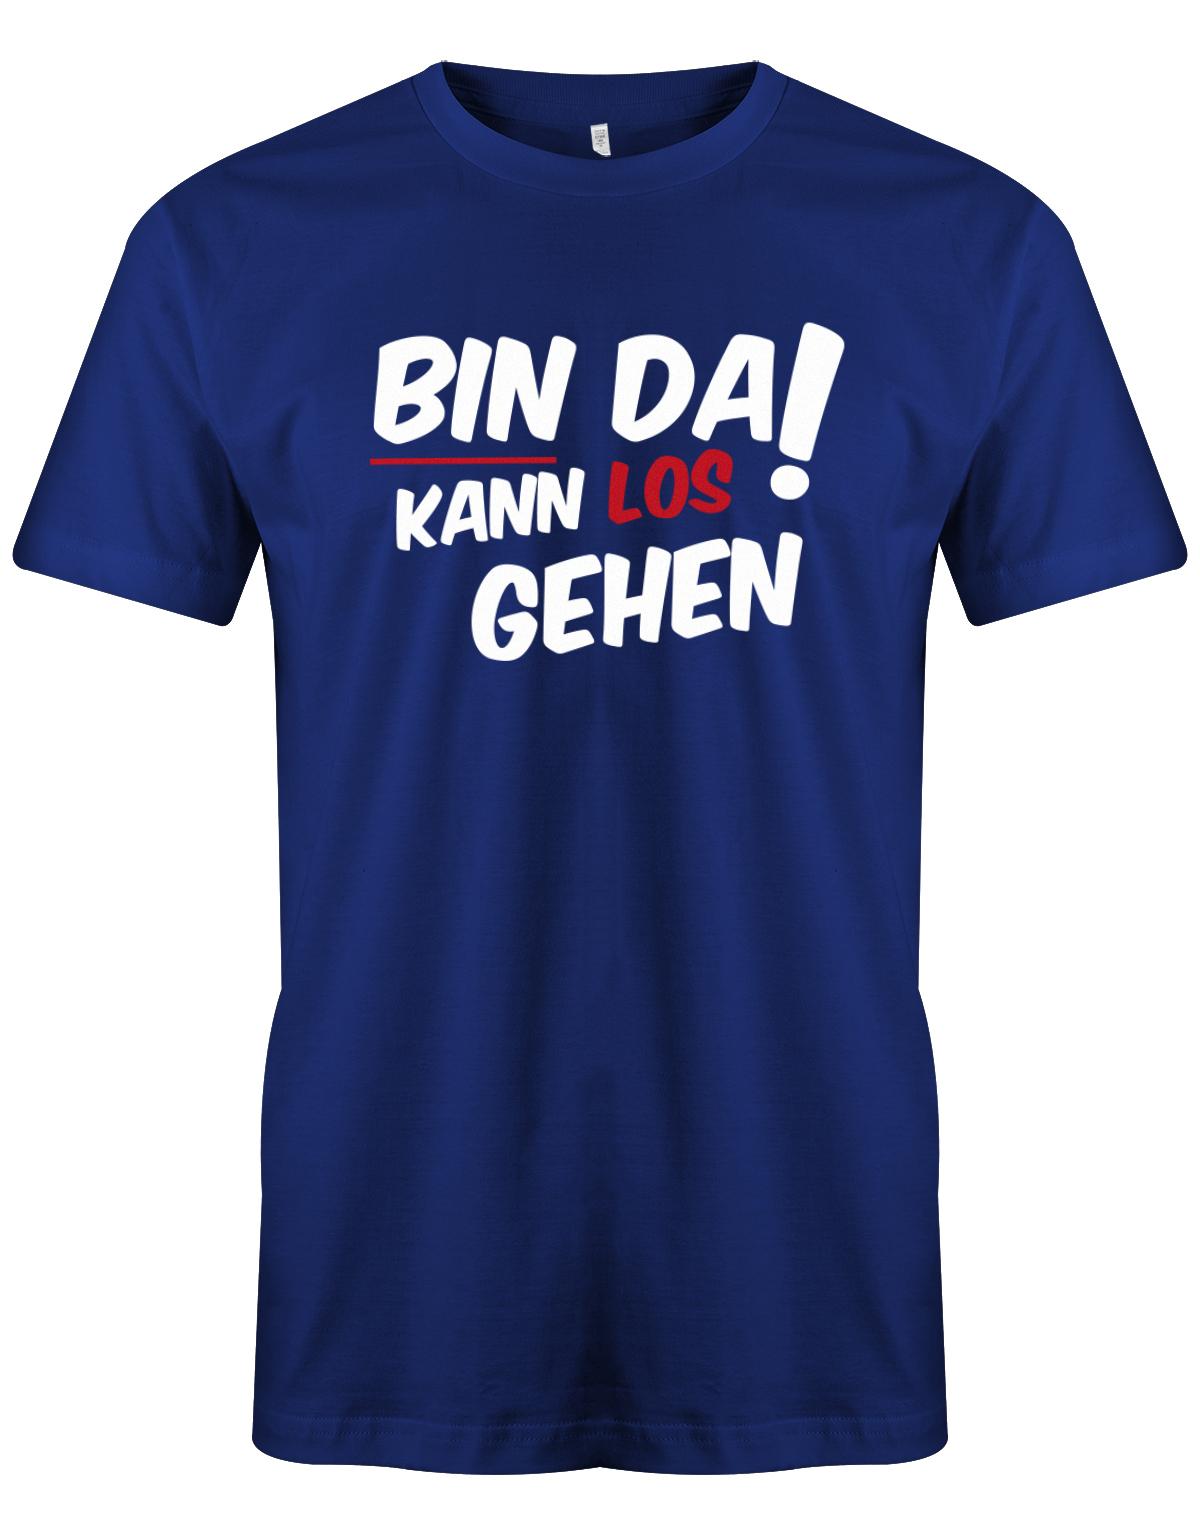 Bin da kann los gehen - Fun Lustige Sprüche - Herren T-Shirt myShirtStore Royalblau